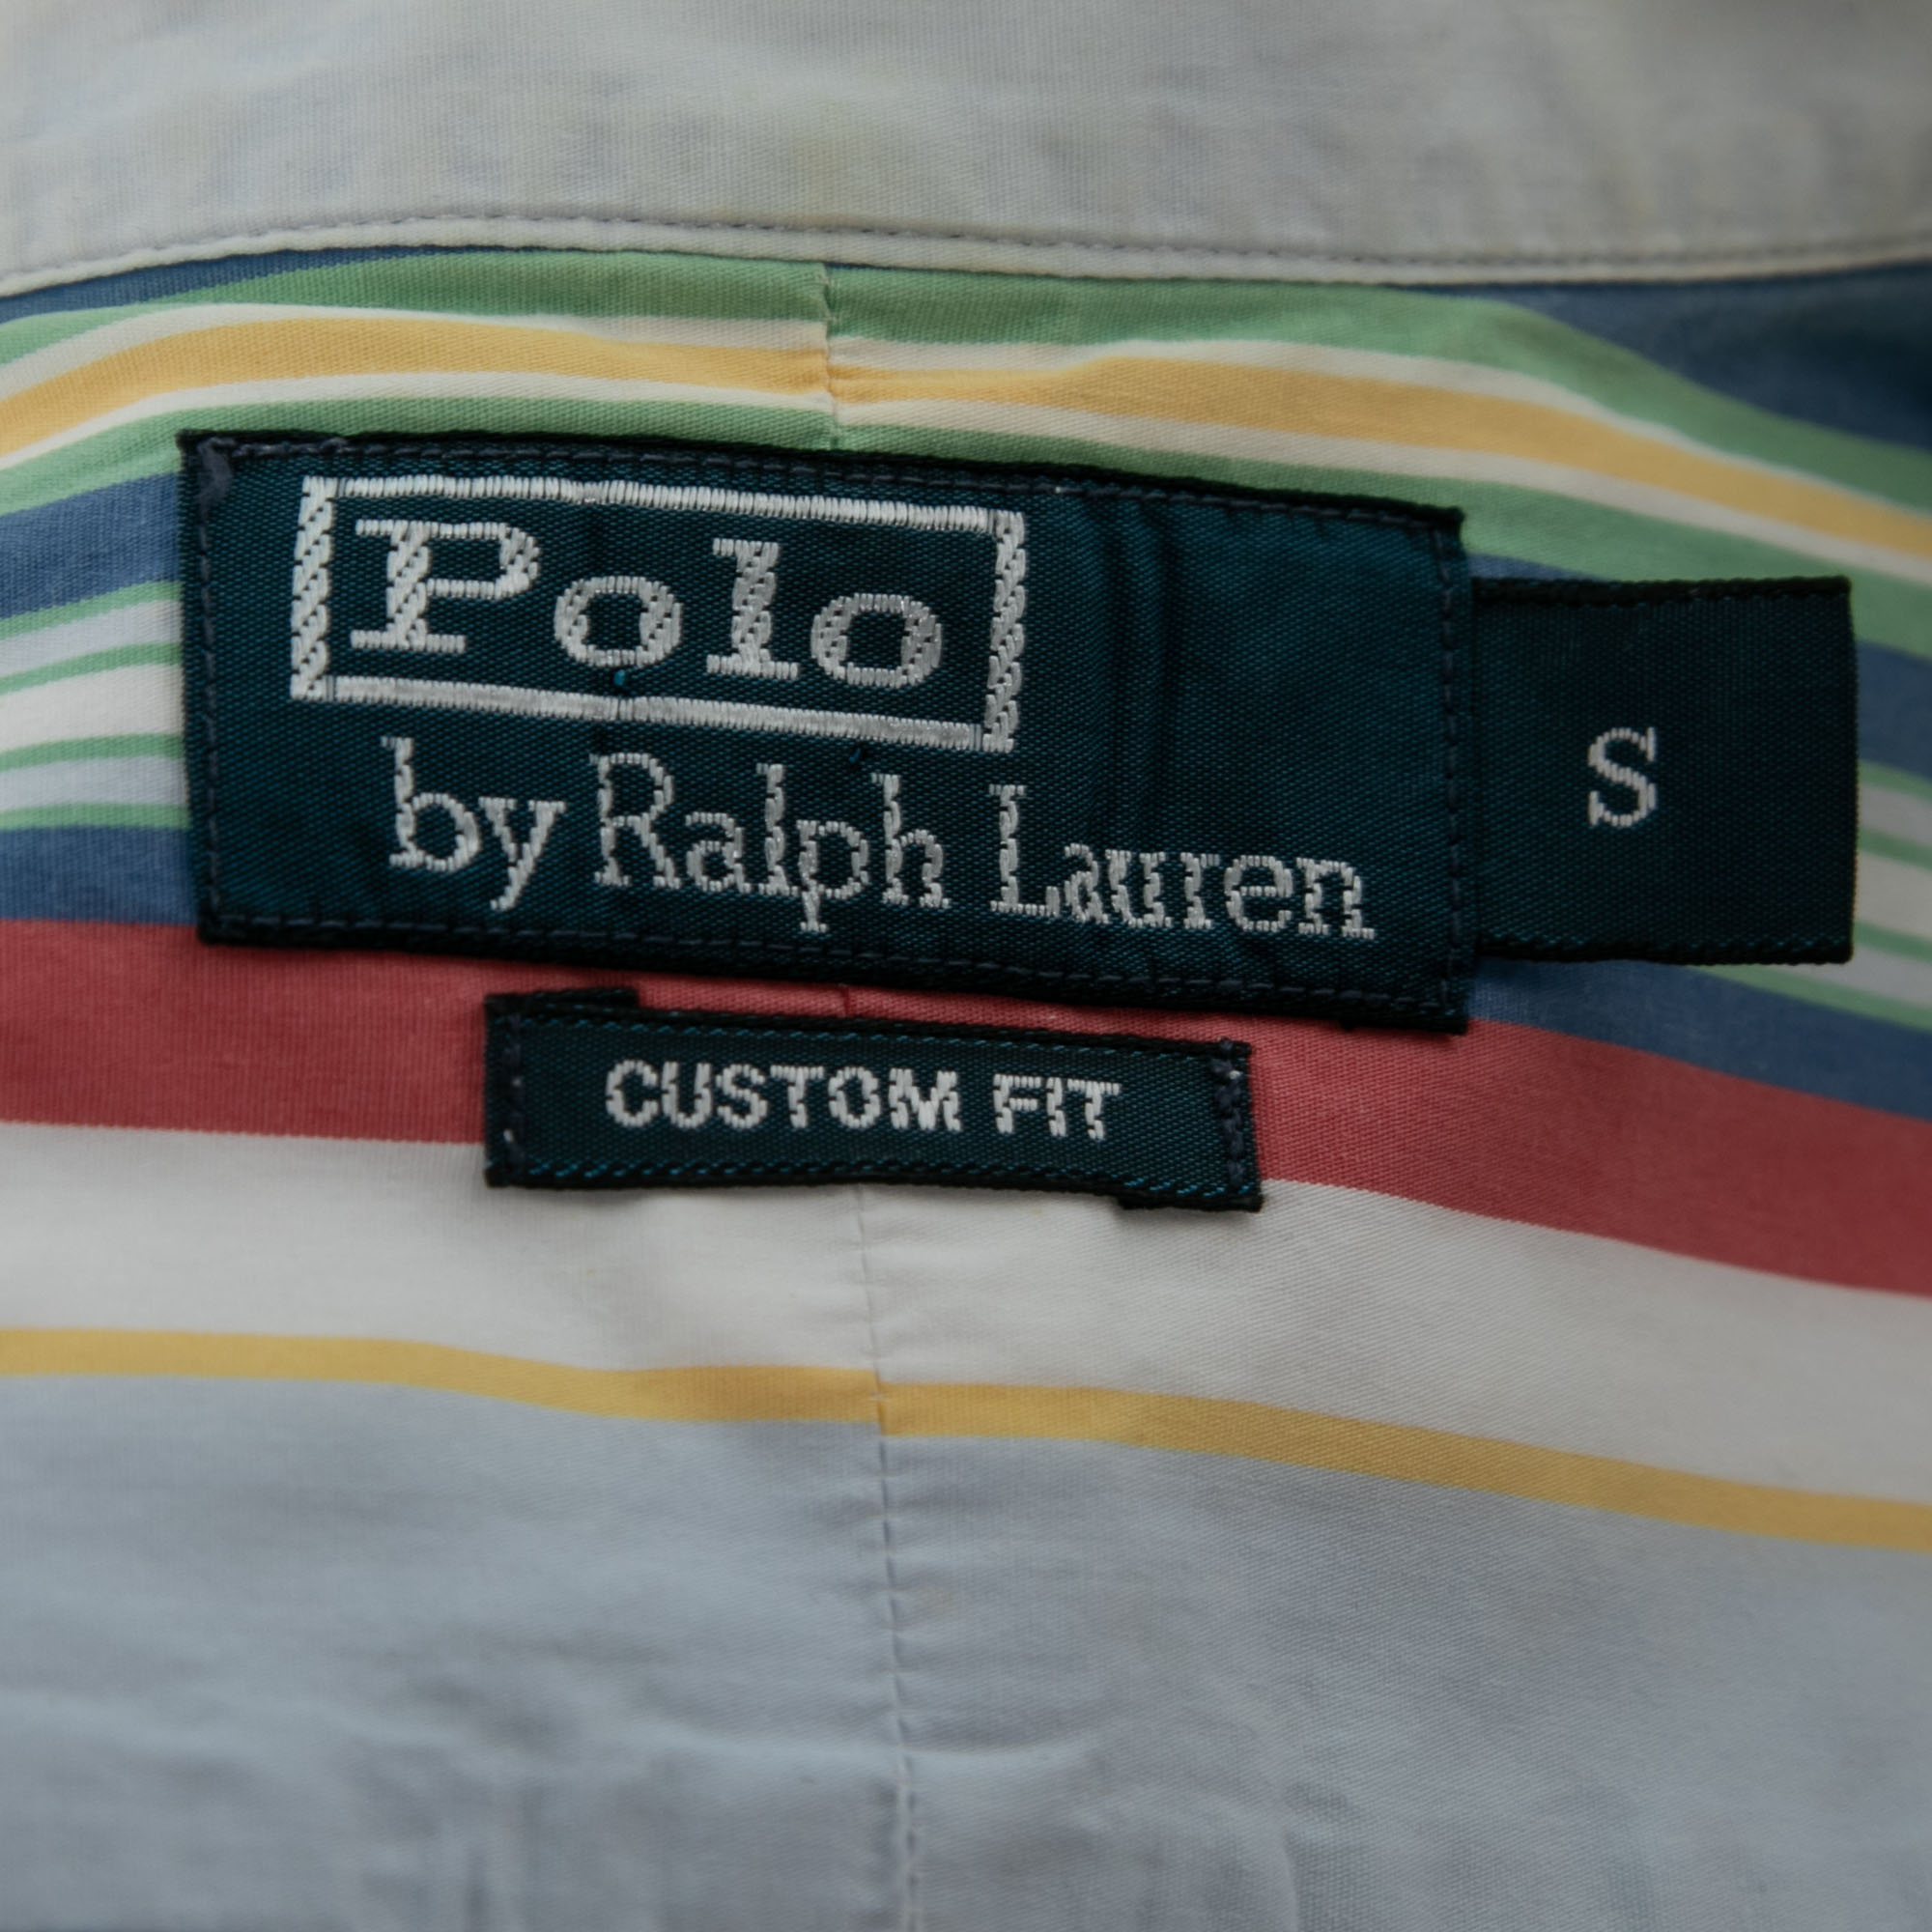 Polo Ralph Lauren Multicolor Striped Cotton Button Down Shirt S